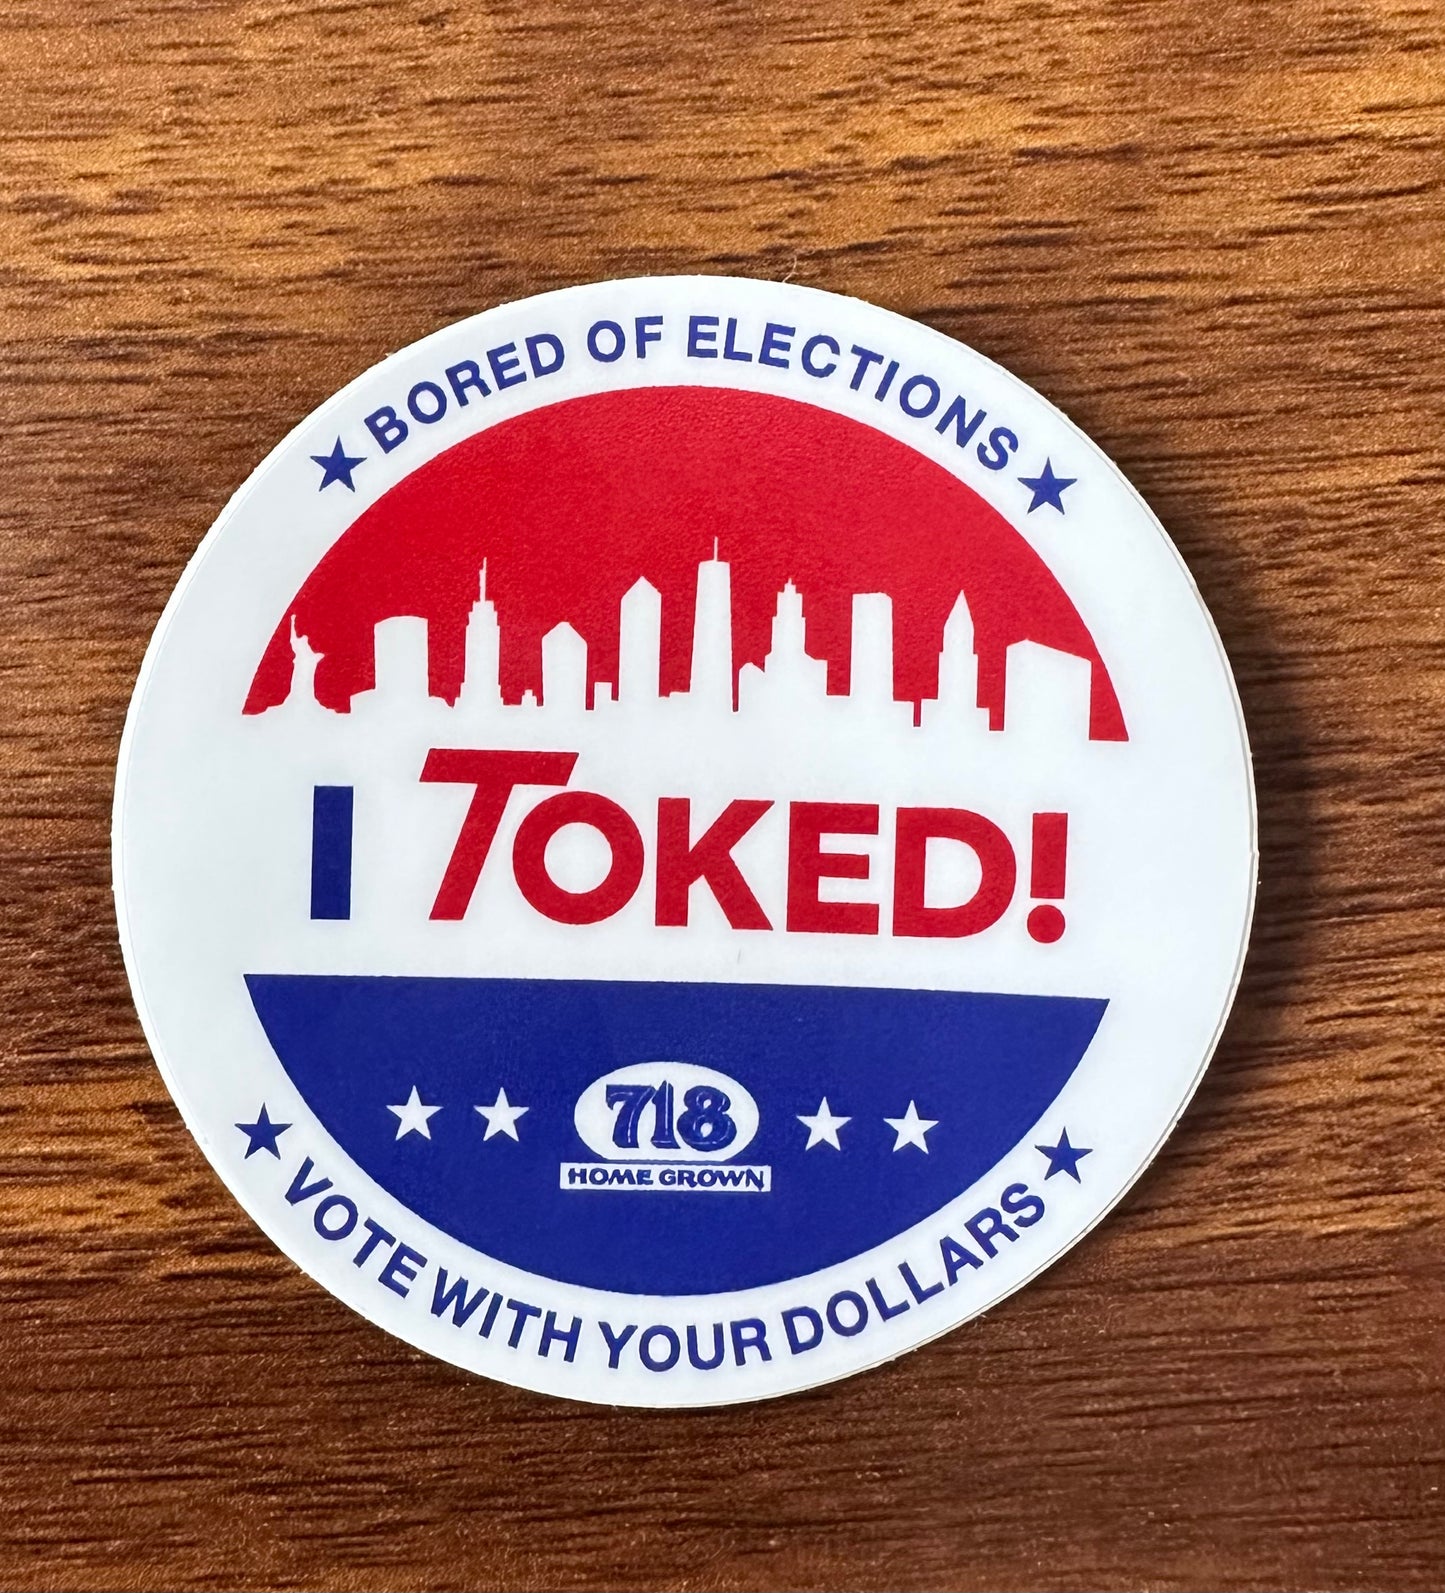 "I toked" sticker